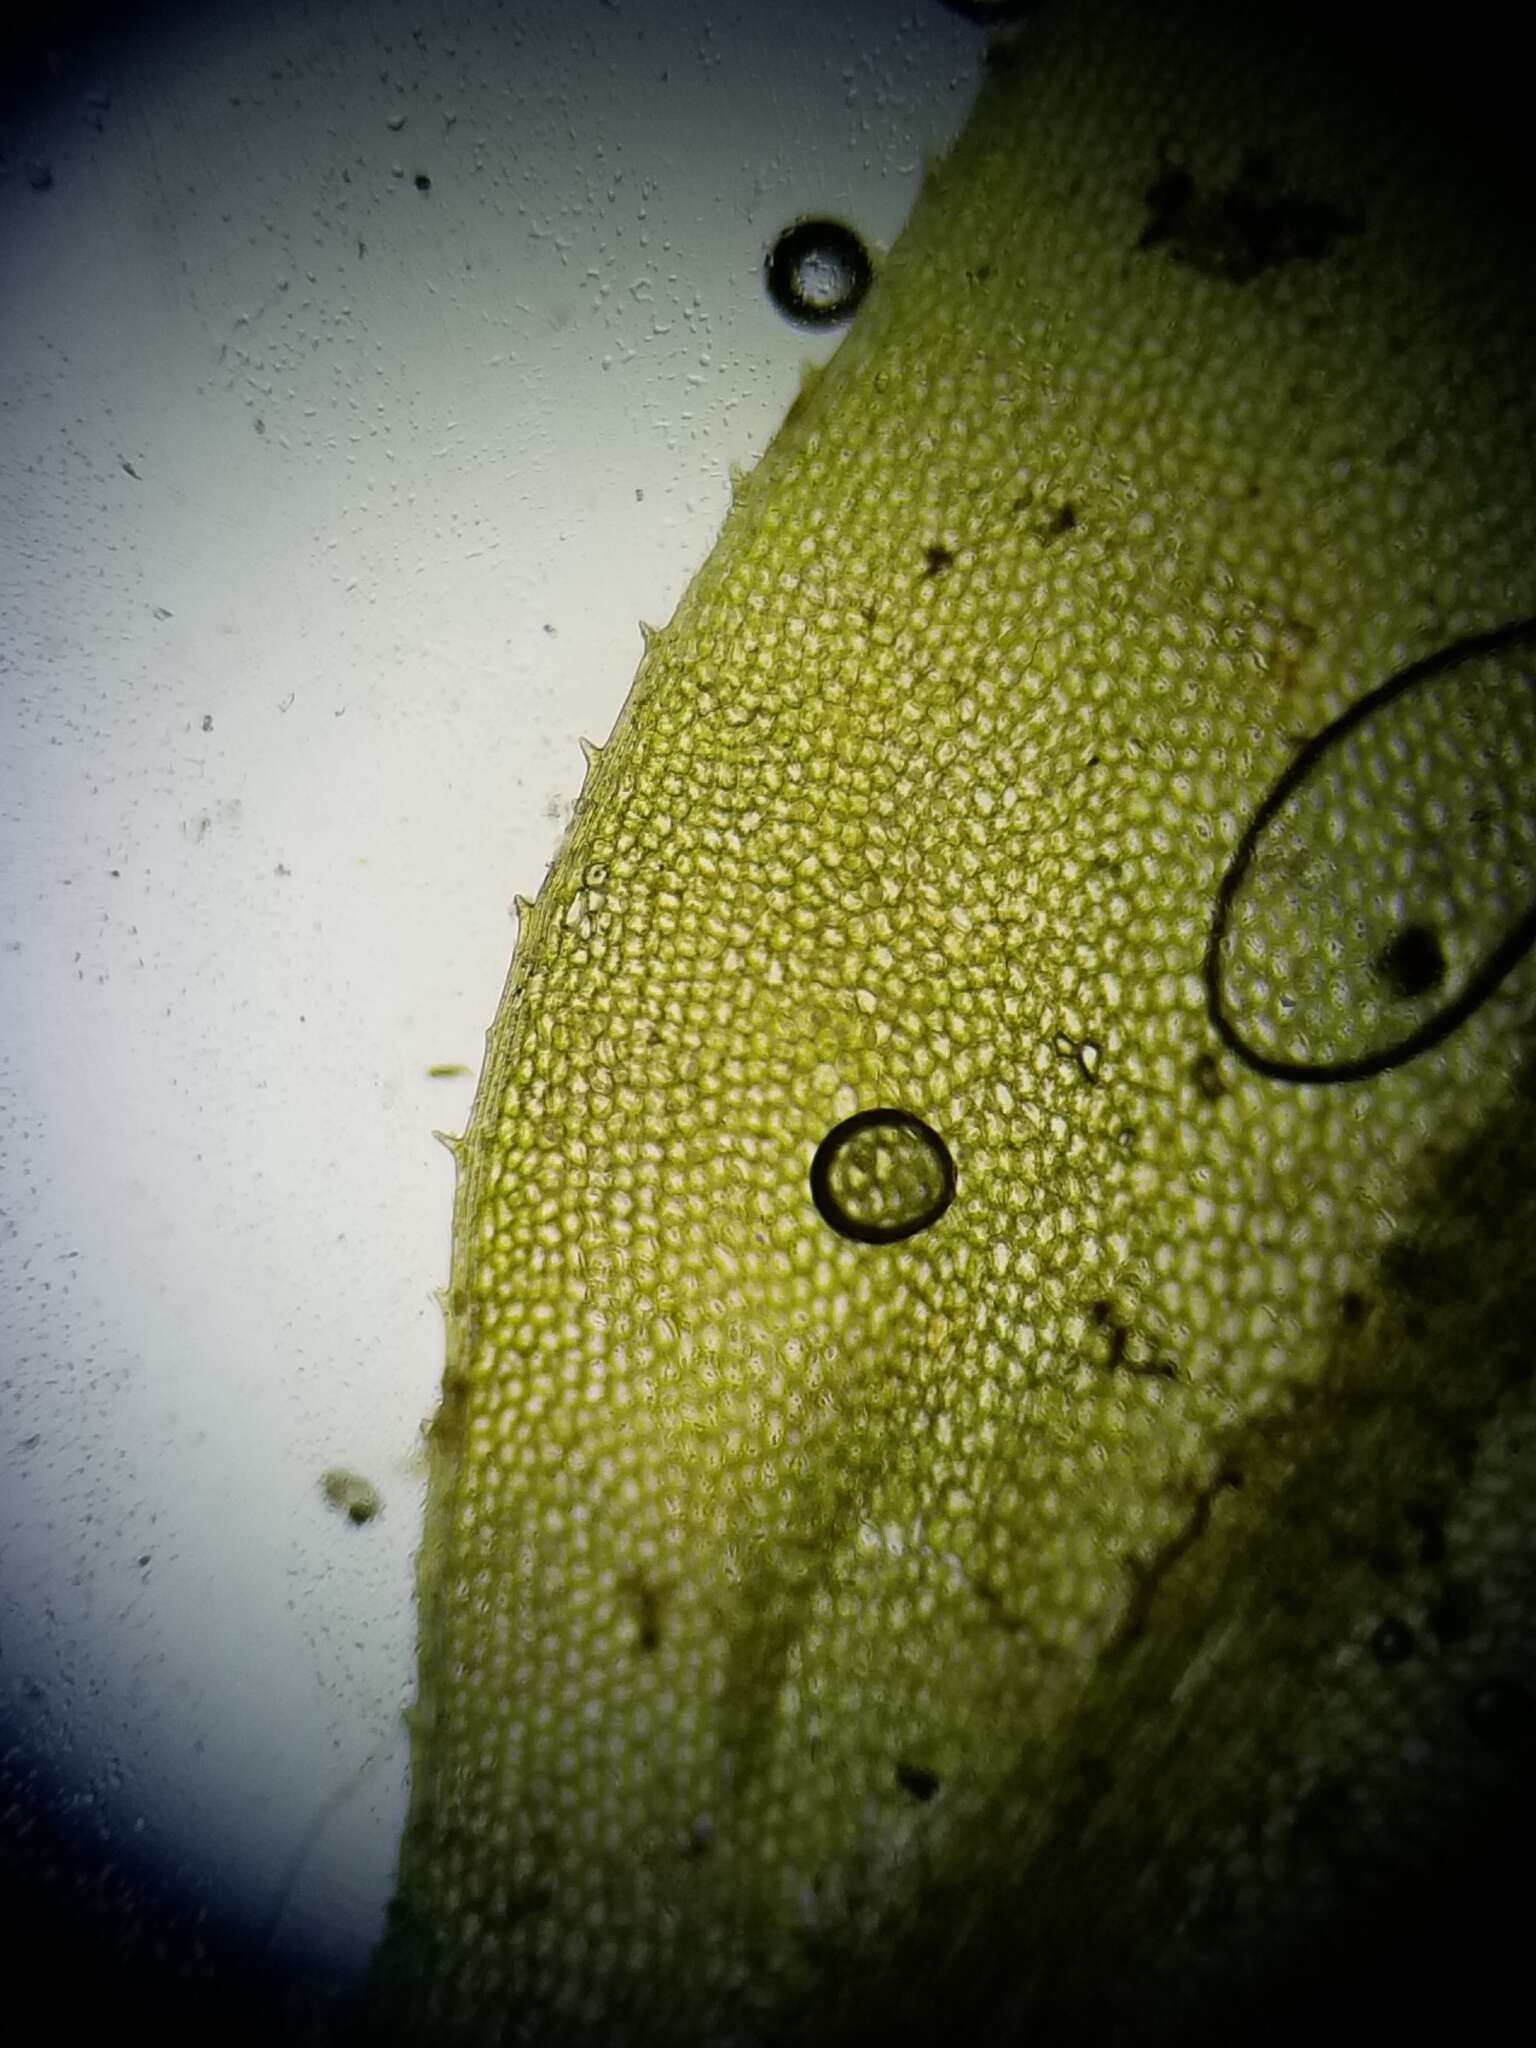 Image of intermediate plagiomnium moss